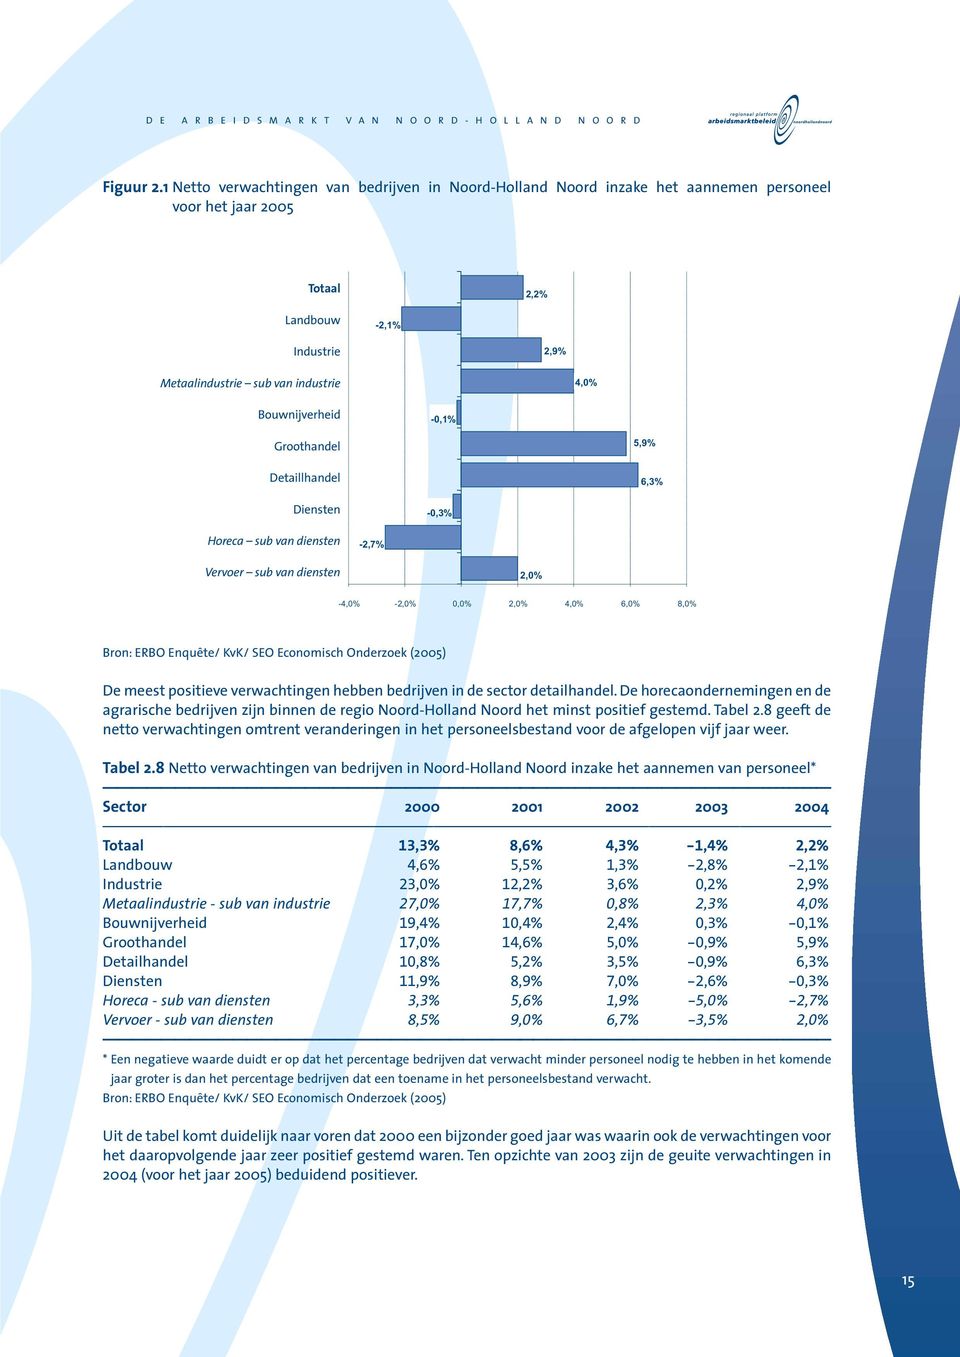 Bouwnijverheid -0,1% Groothandel 5,9% Detaillhandel 6,3% Diensten -0,3% Horeca sub van diensten -2,7% Vervoer sub van diensten 2,0% -4,0% -2,0% 0,0% 2,0% 4,0% 6,0% 8,0% Bron: ERBO Enquête/ KvK/ SEO